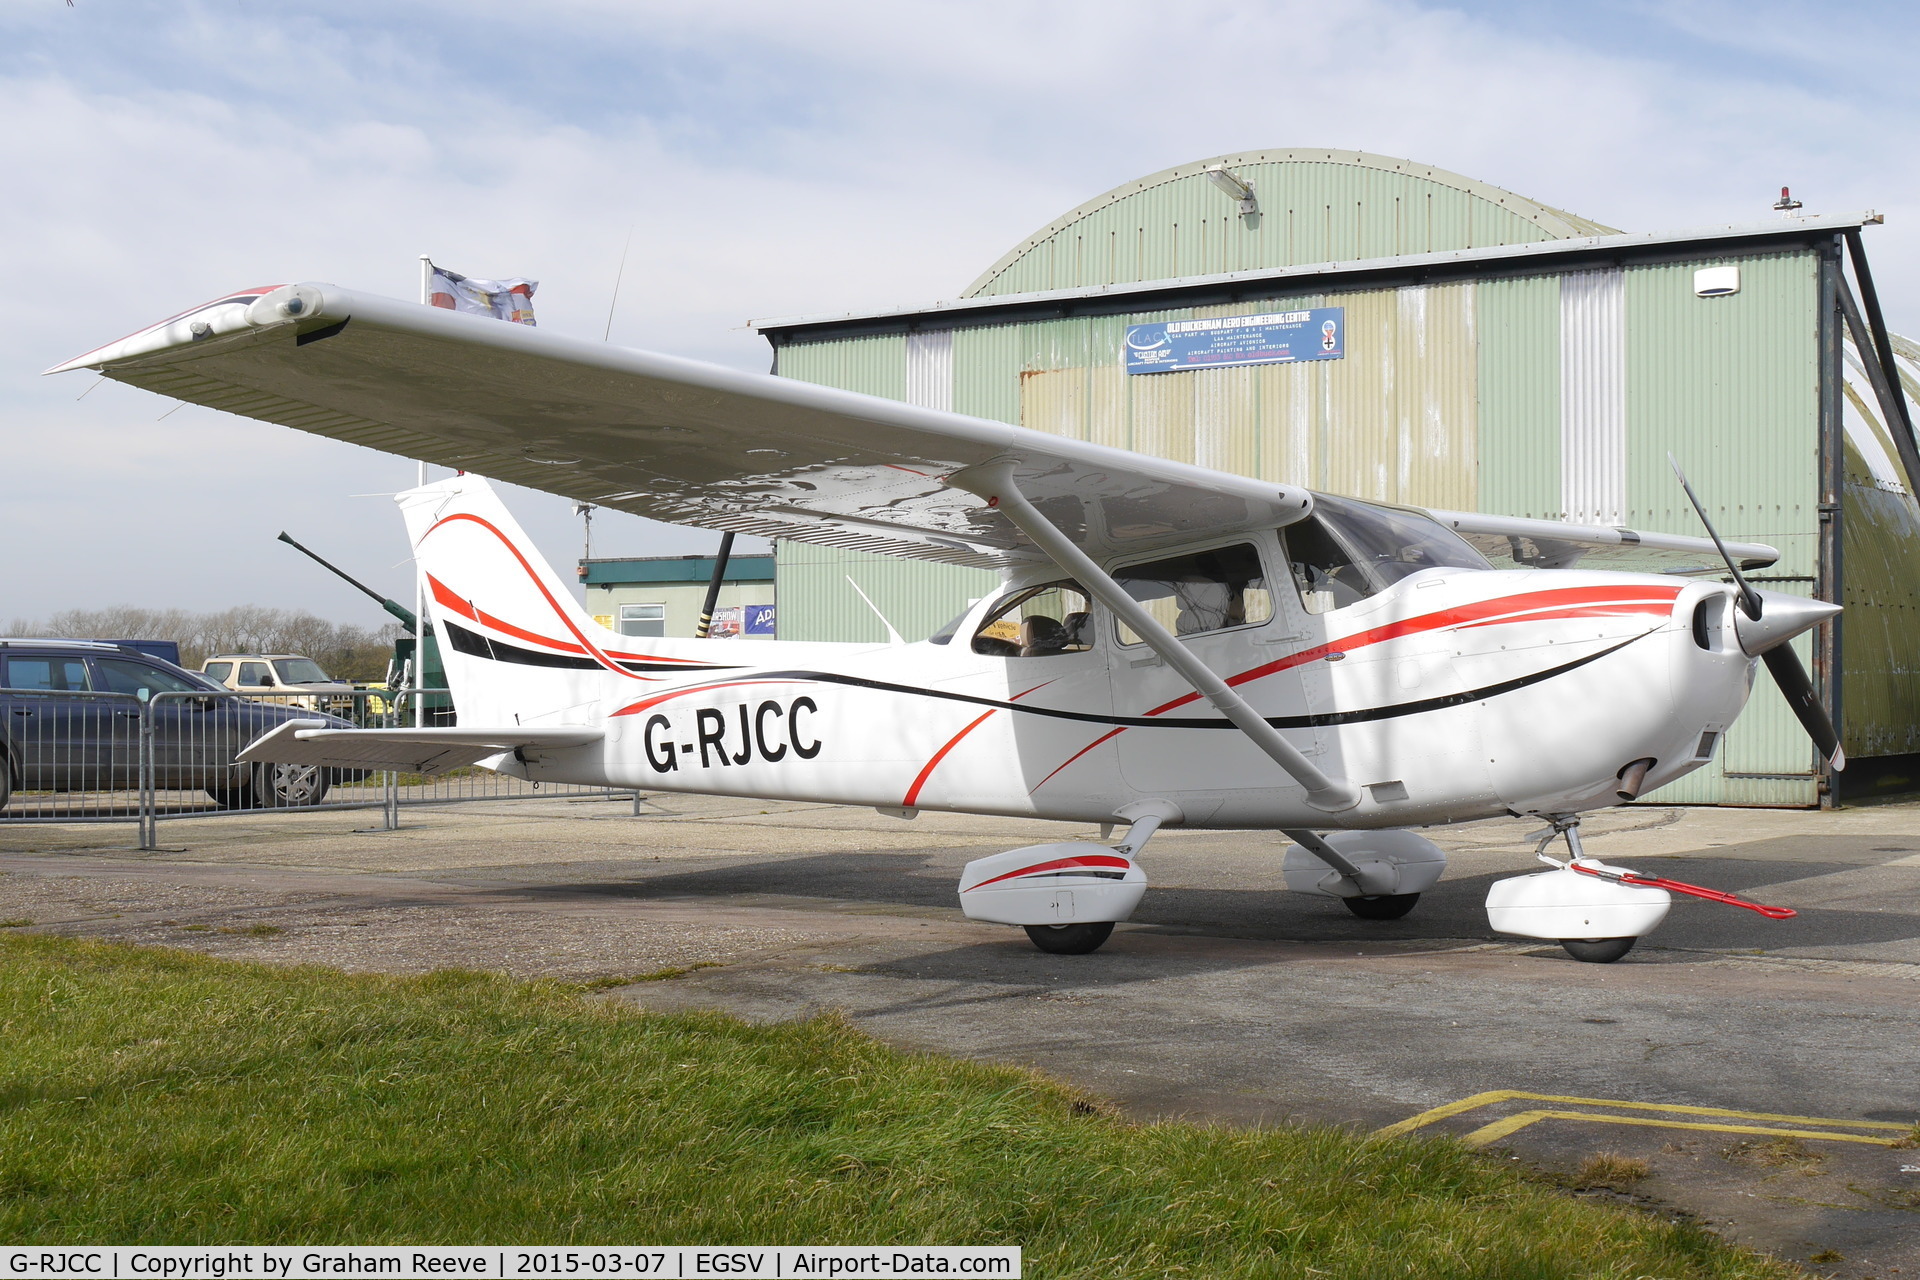 G-RJCC, 2007 Cessna 172SP Skyhawk C/N 172S10525, Parked at Old Buckenham.